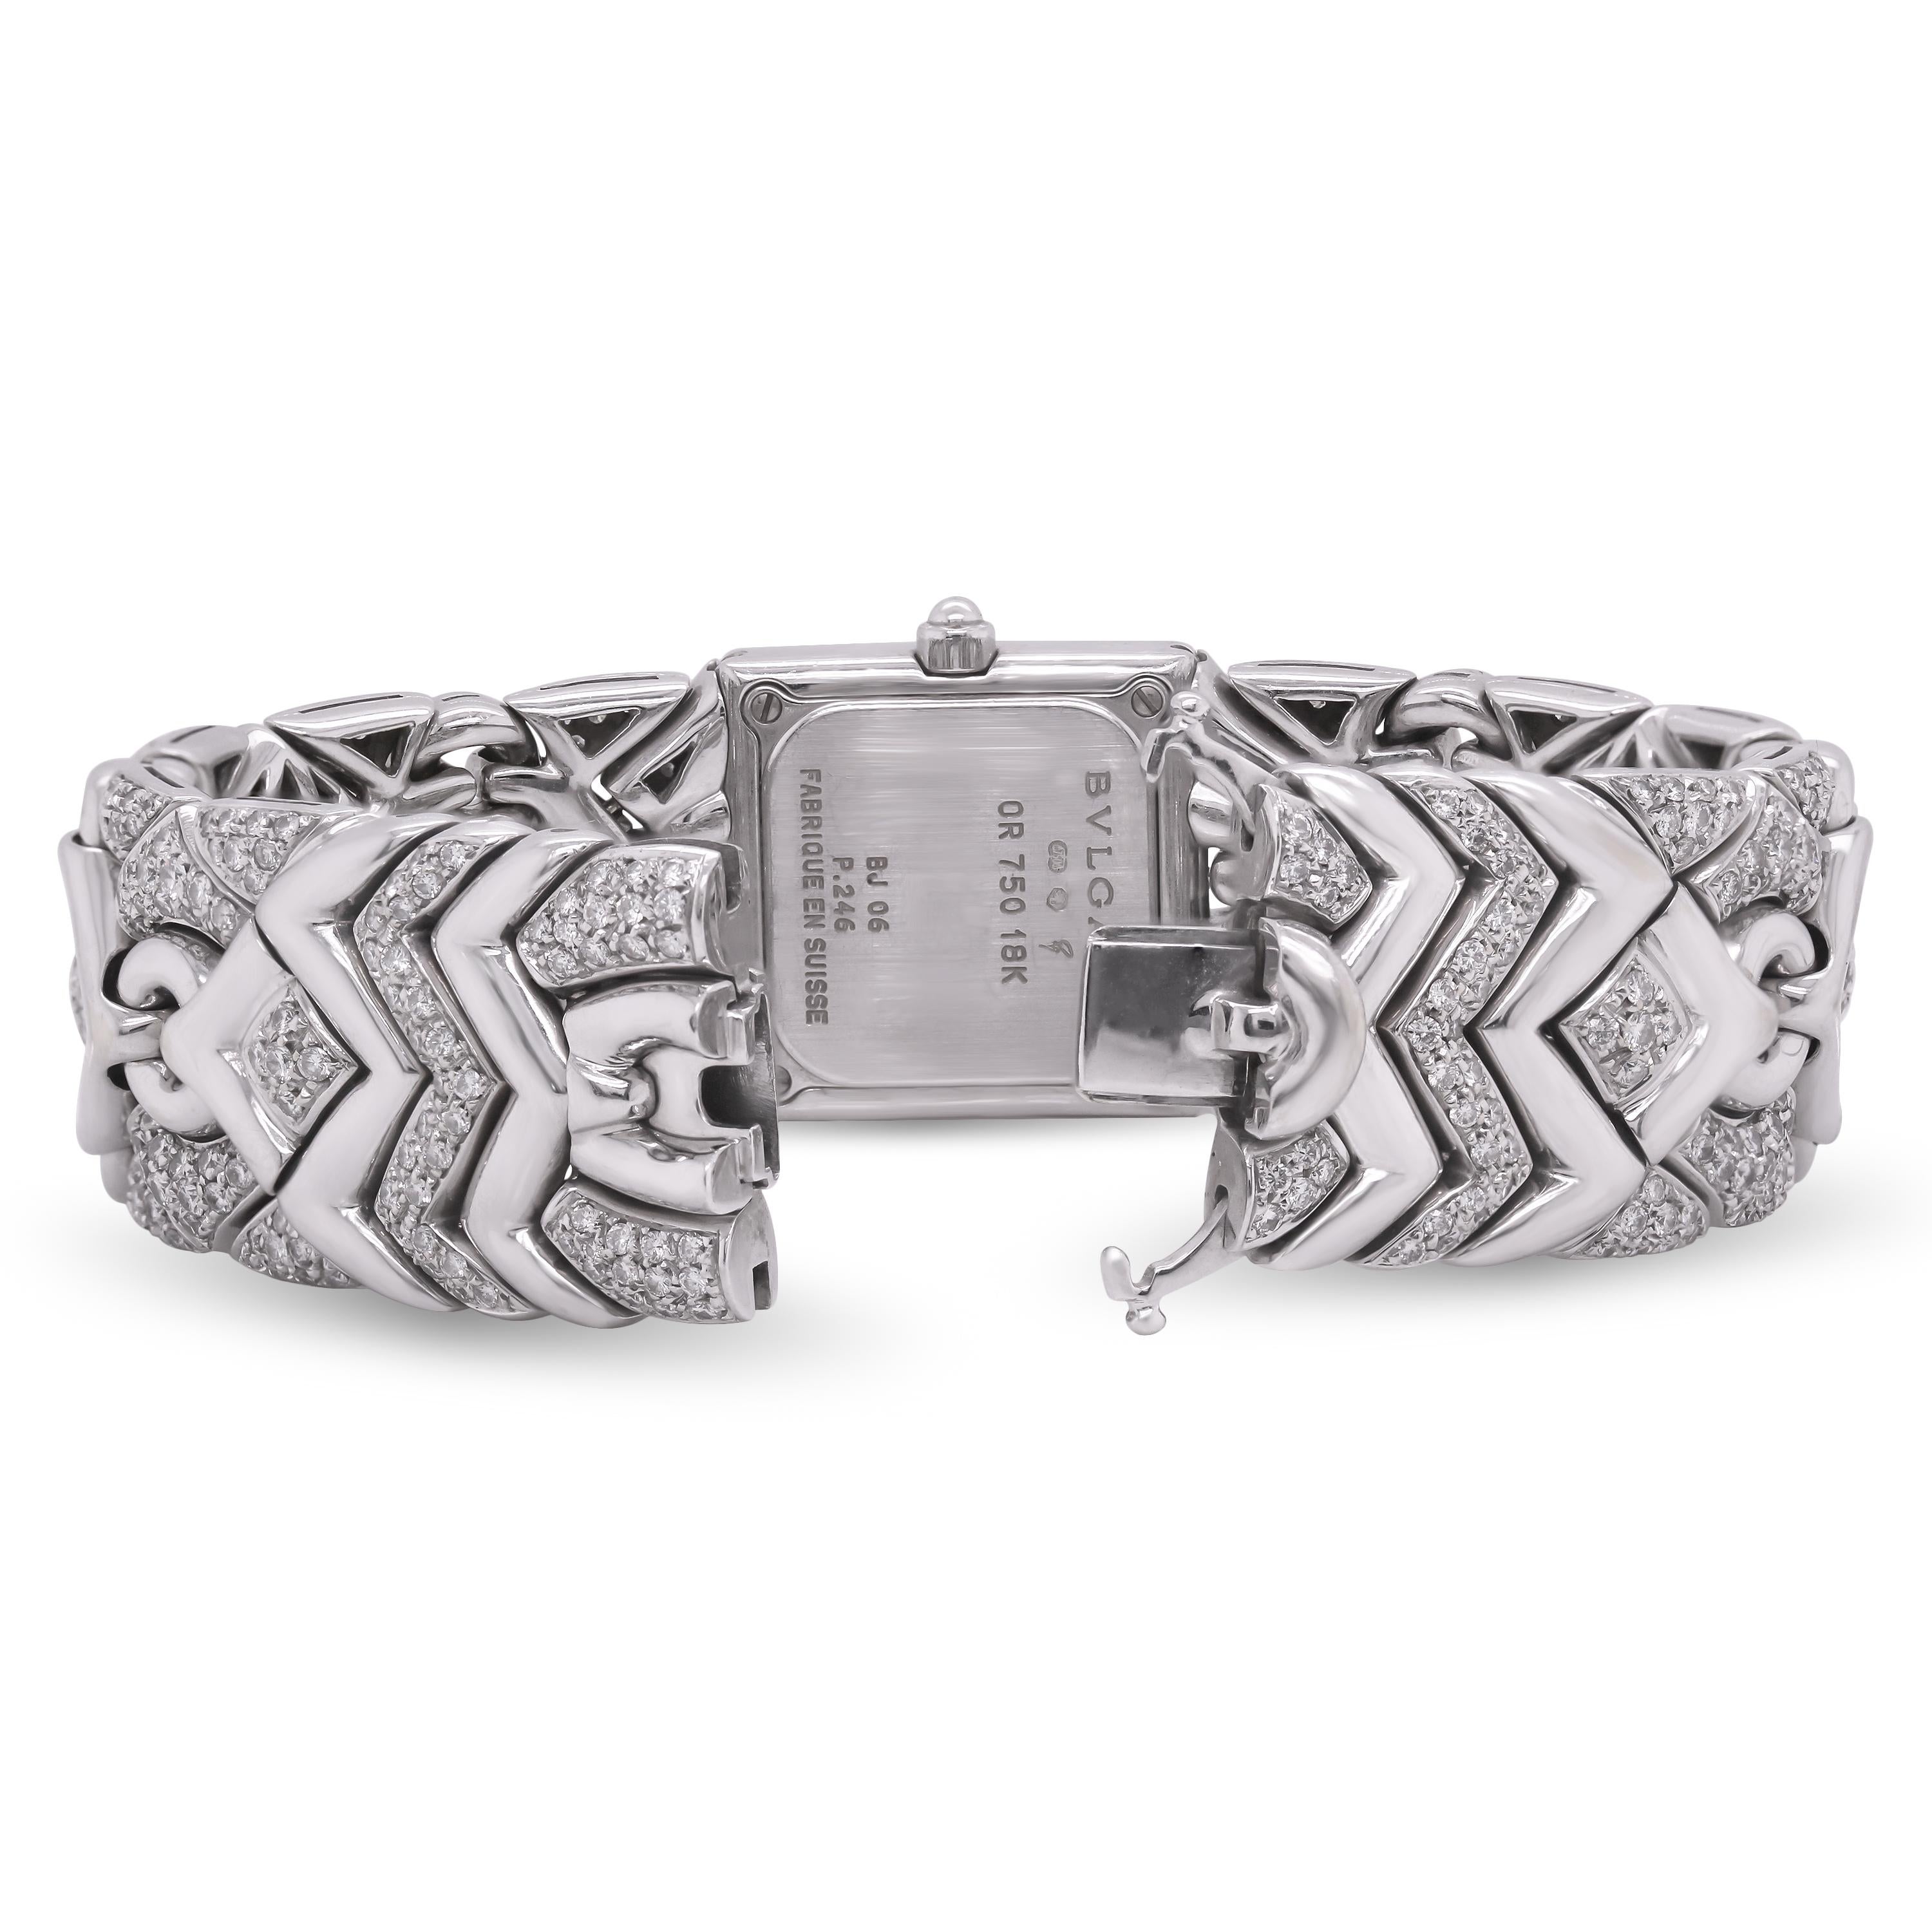 Women's Bvlgari Trika 18K White Gold All Diamond Watch For Sale